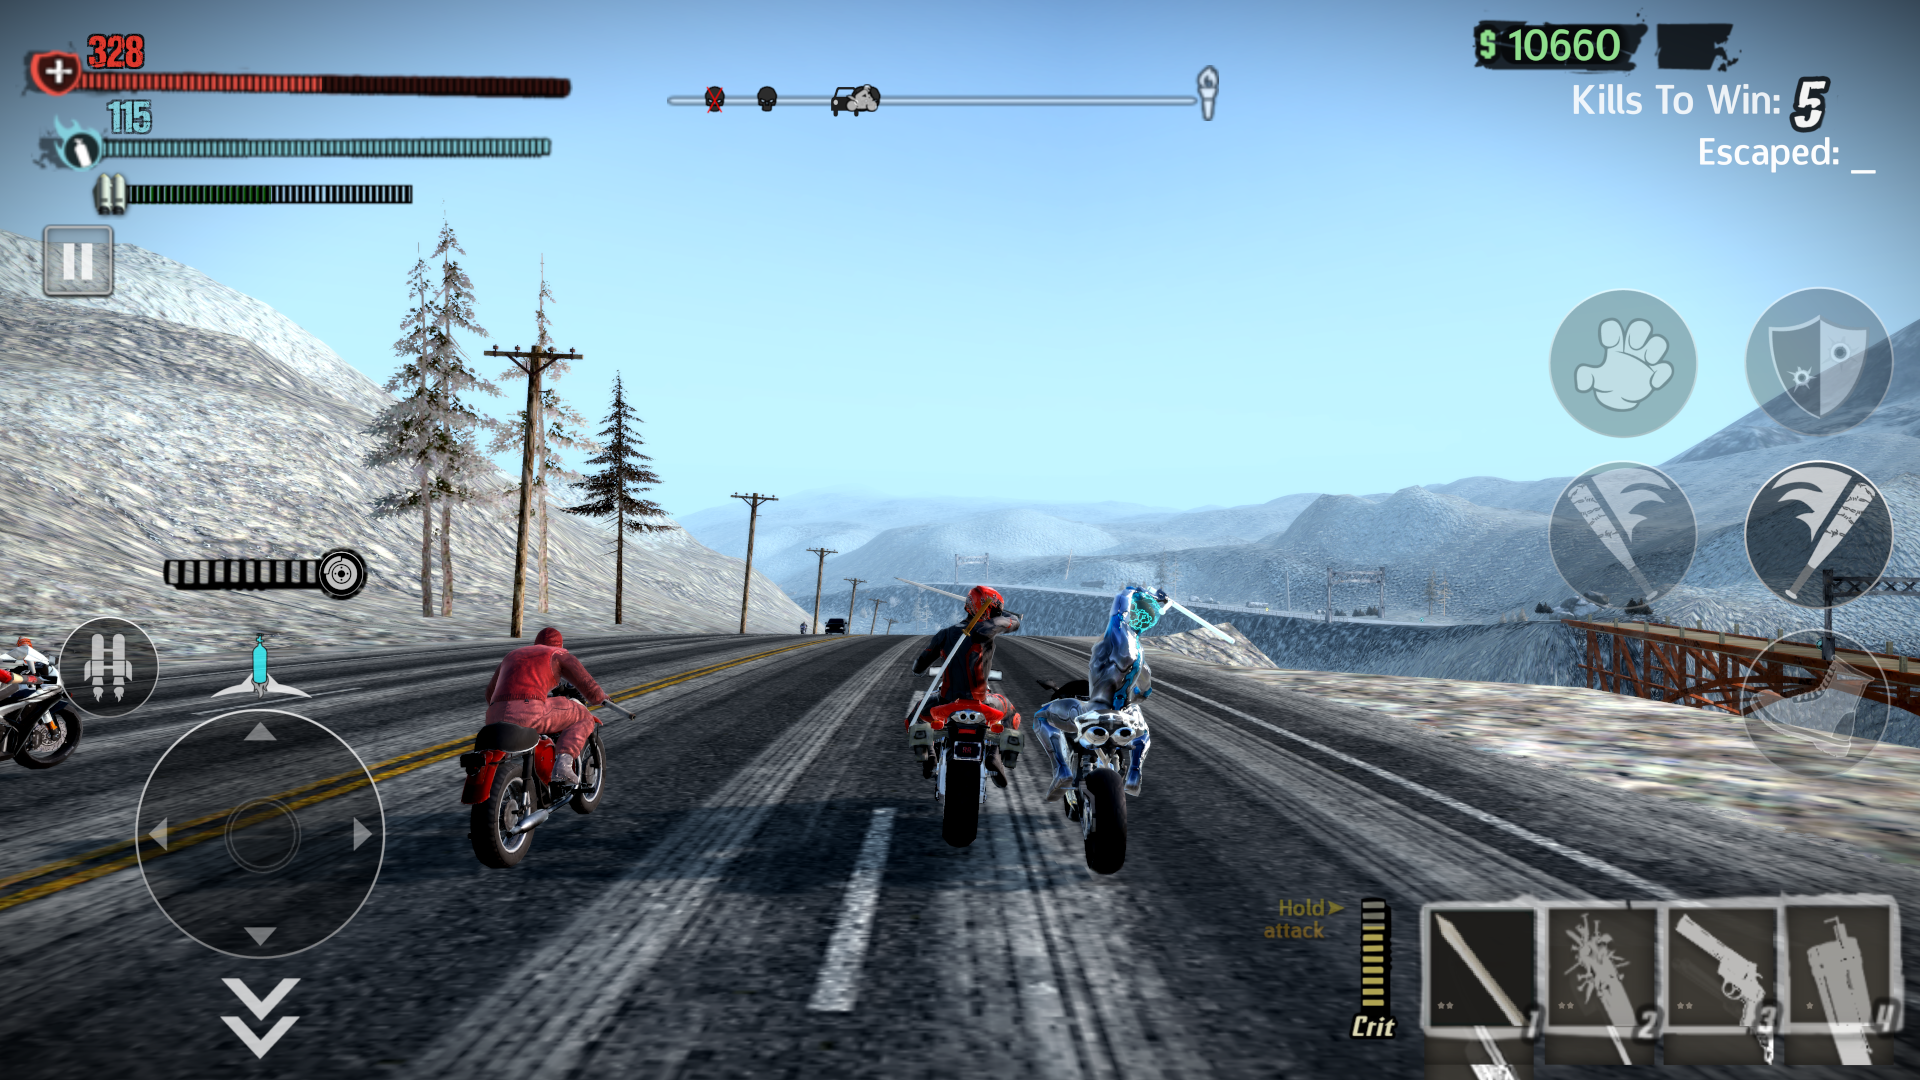 Screenshot 1 of Road Redemption Mobile 12.0